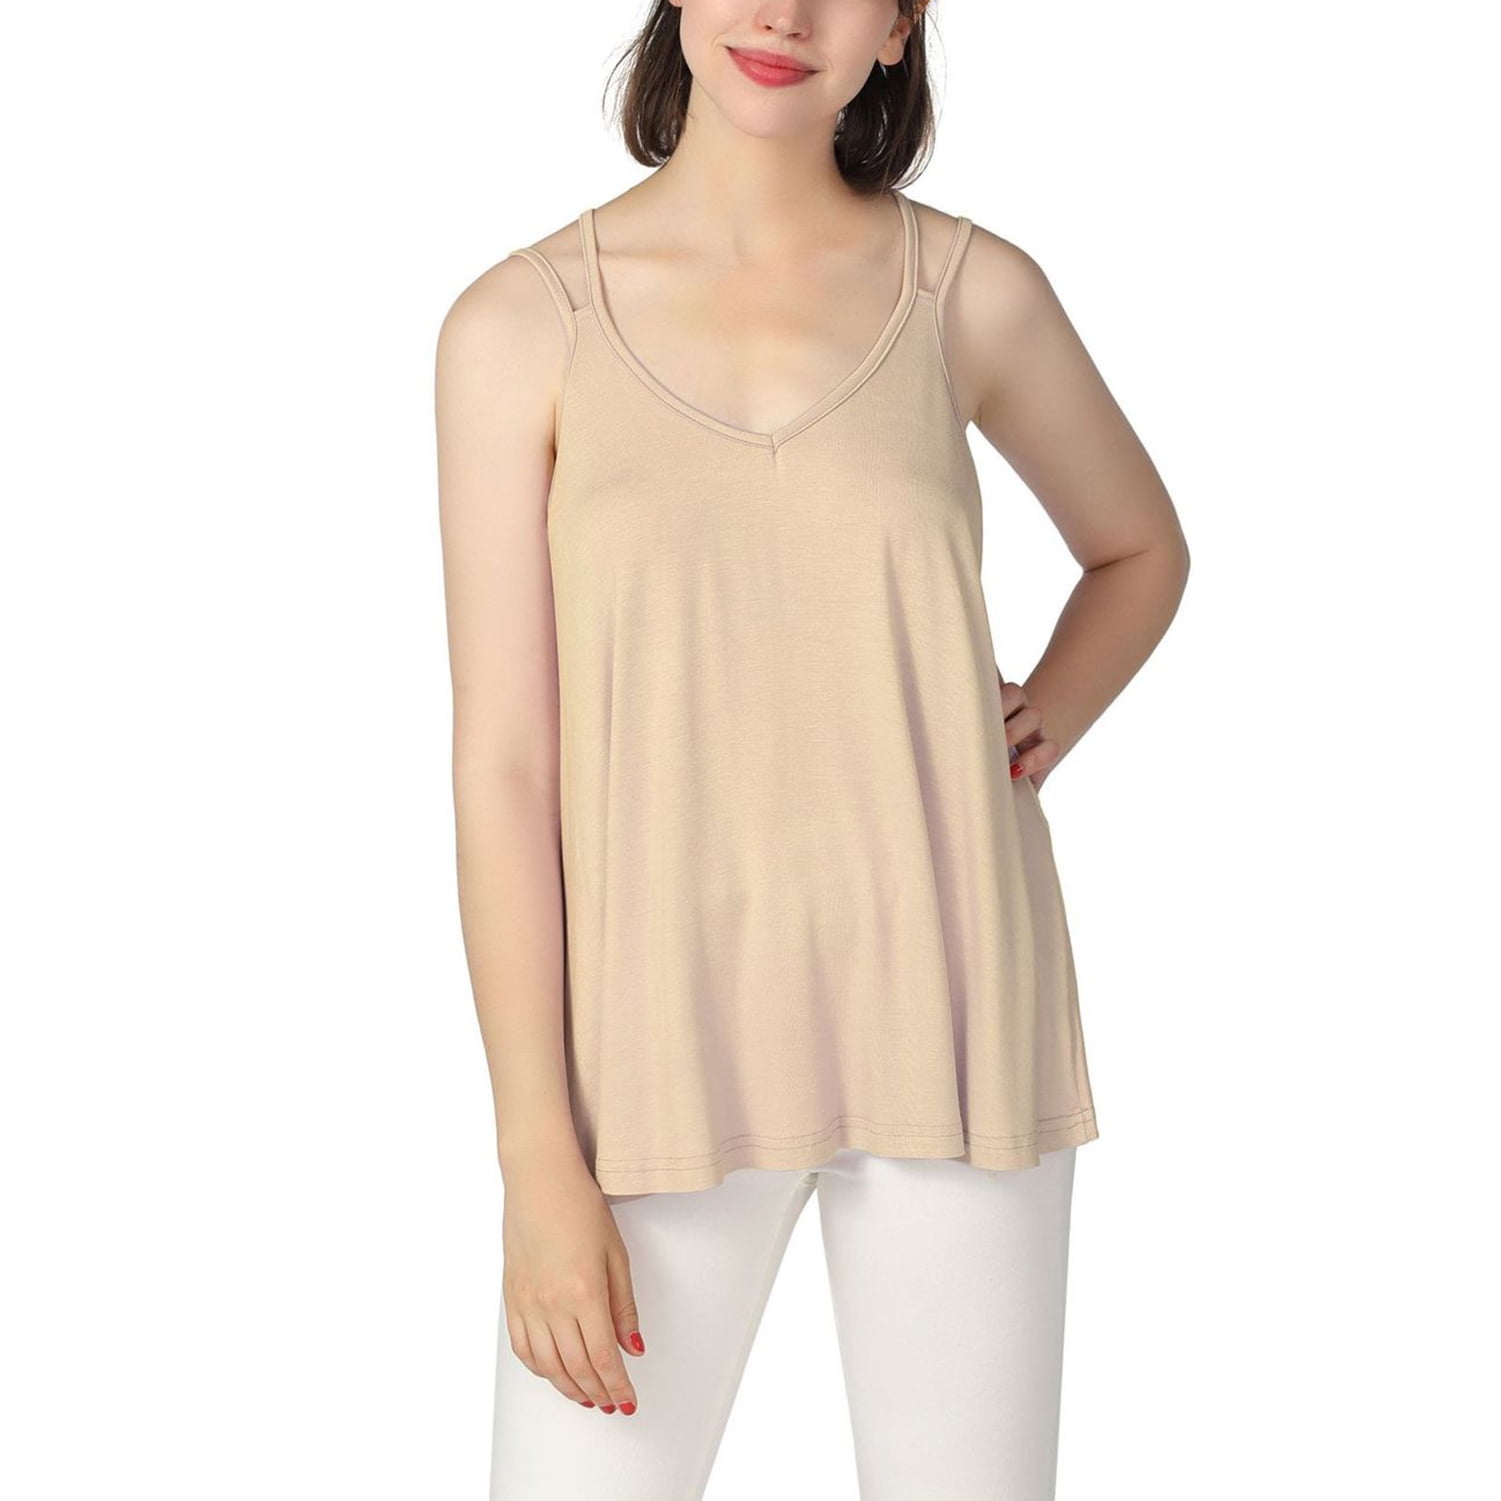 Jdlsppl Women's Plus Size Top Cami Tank Top Soft Spandex Fall Backless  Summer Deep V Neck Cotton Cami Shirt White 3X-Large